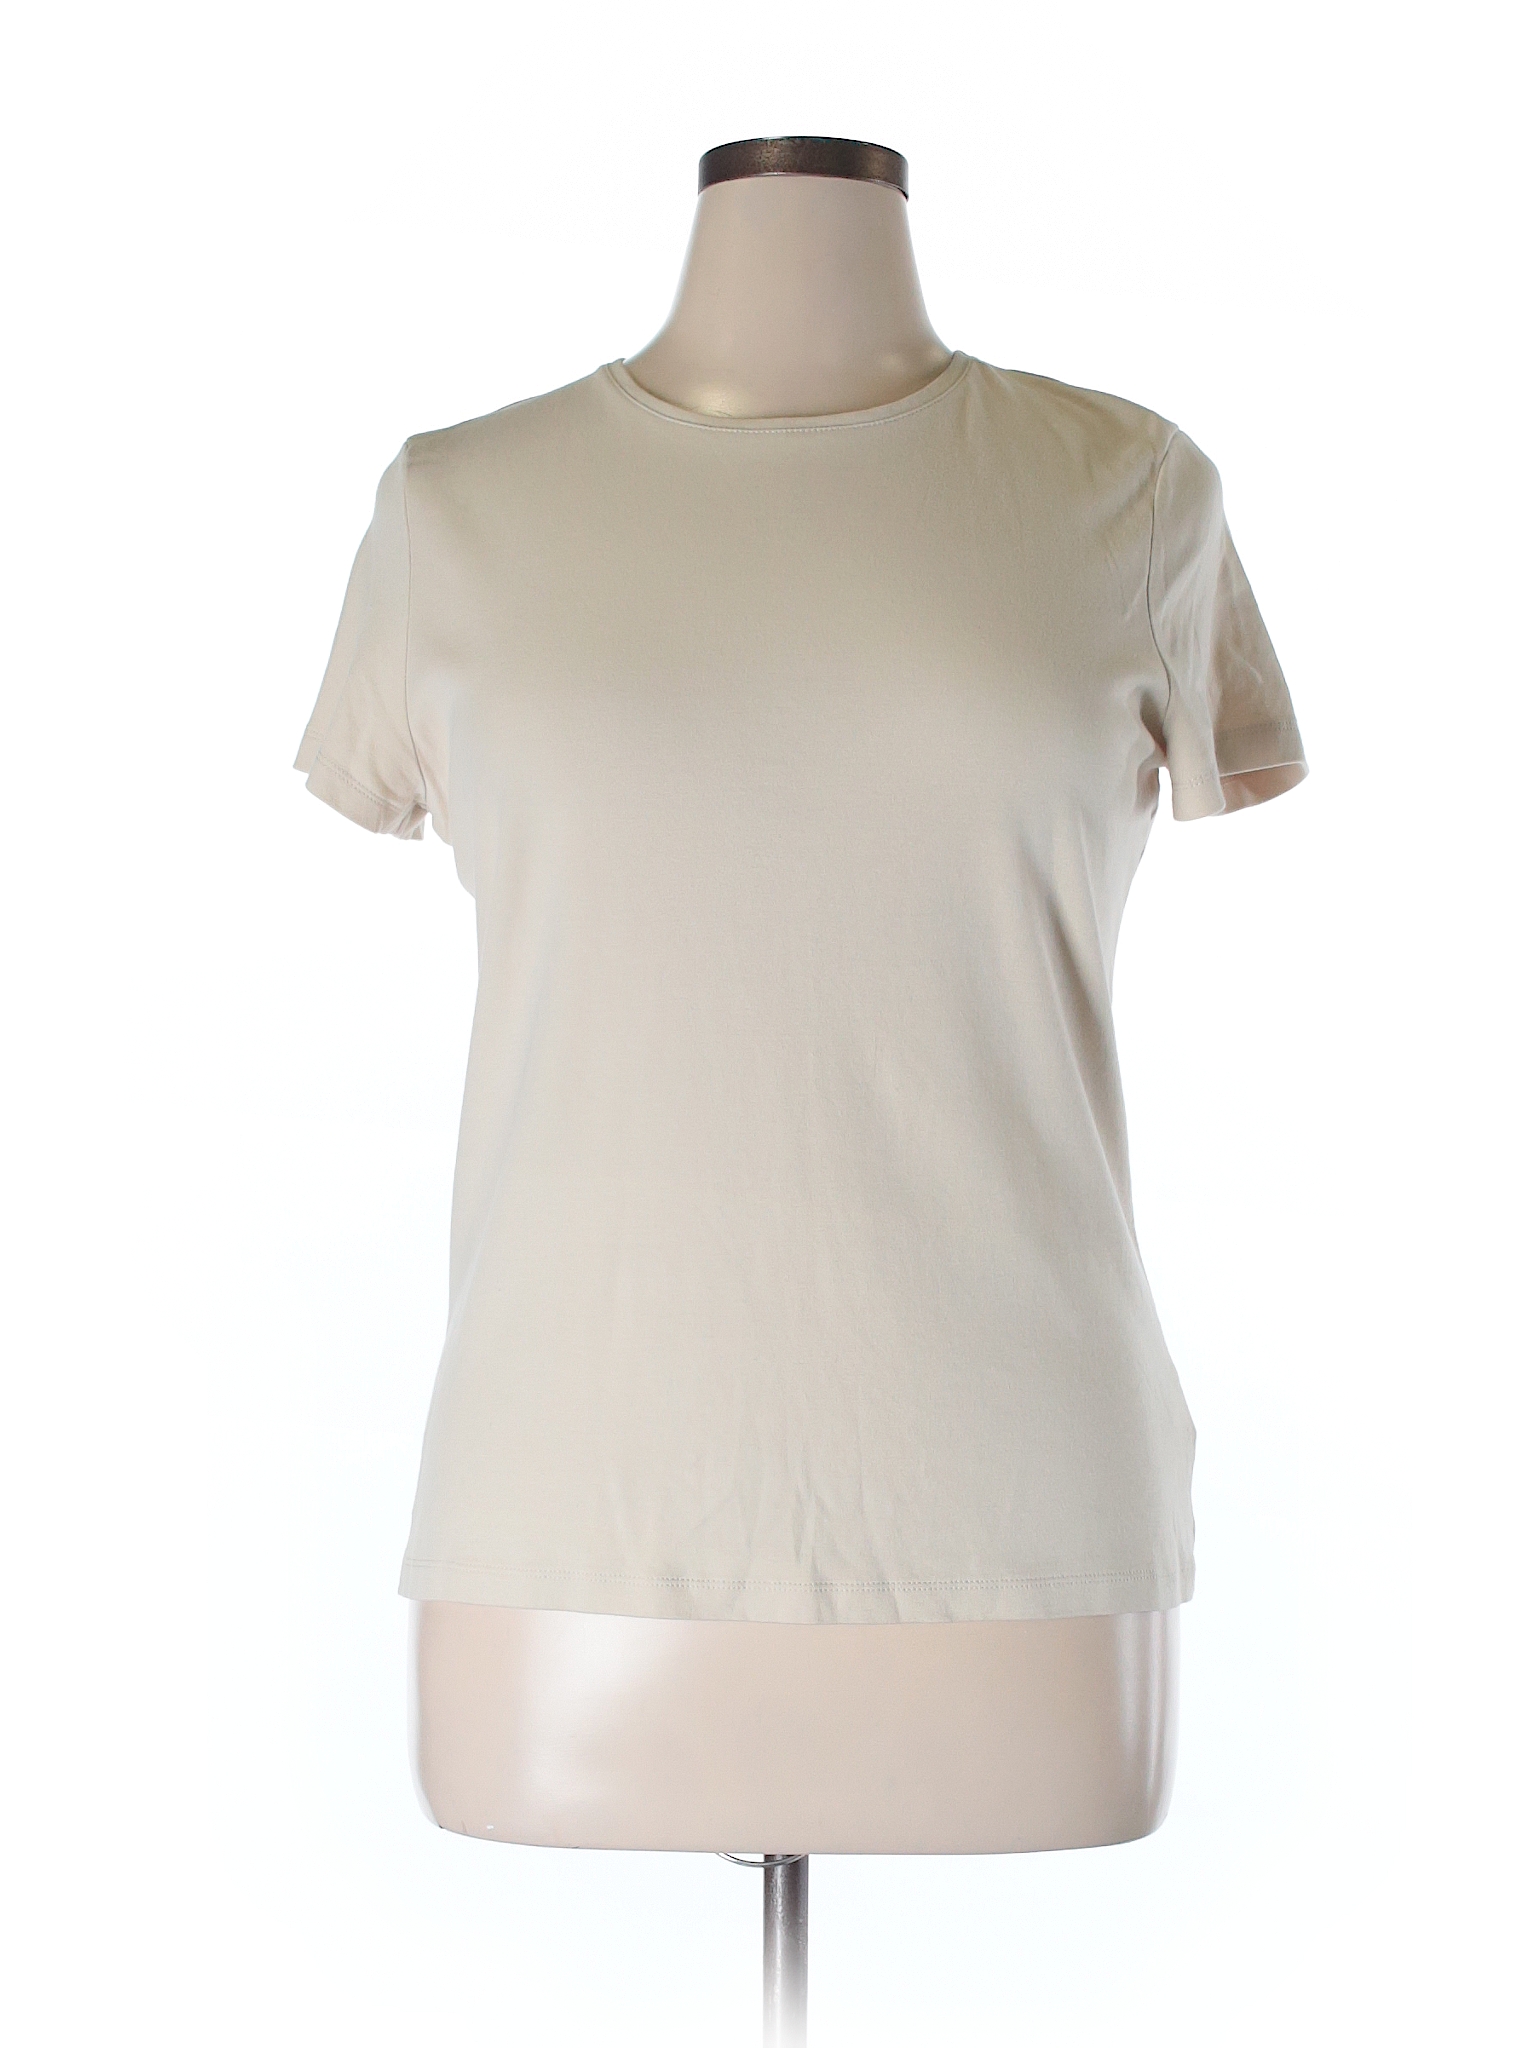 Croft & Barrow 100% Cotton Solid Beige Short Sleeve T-Shirt Size XL ...